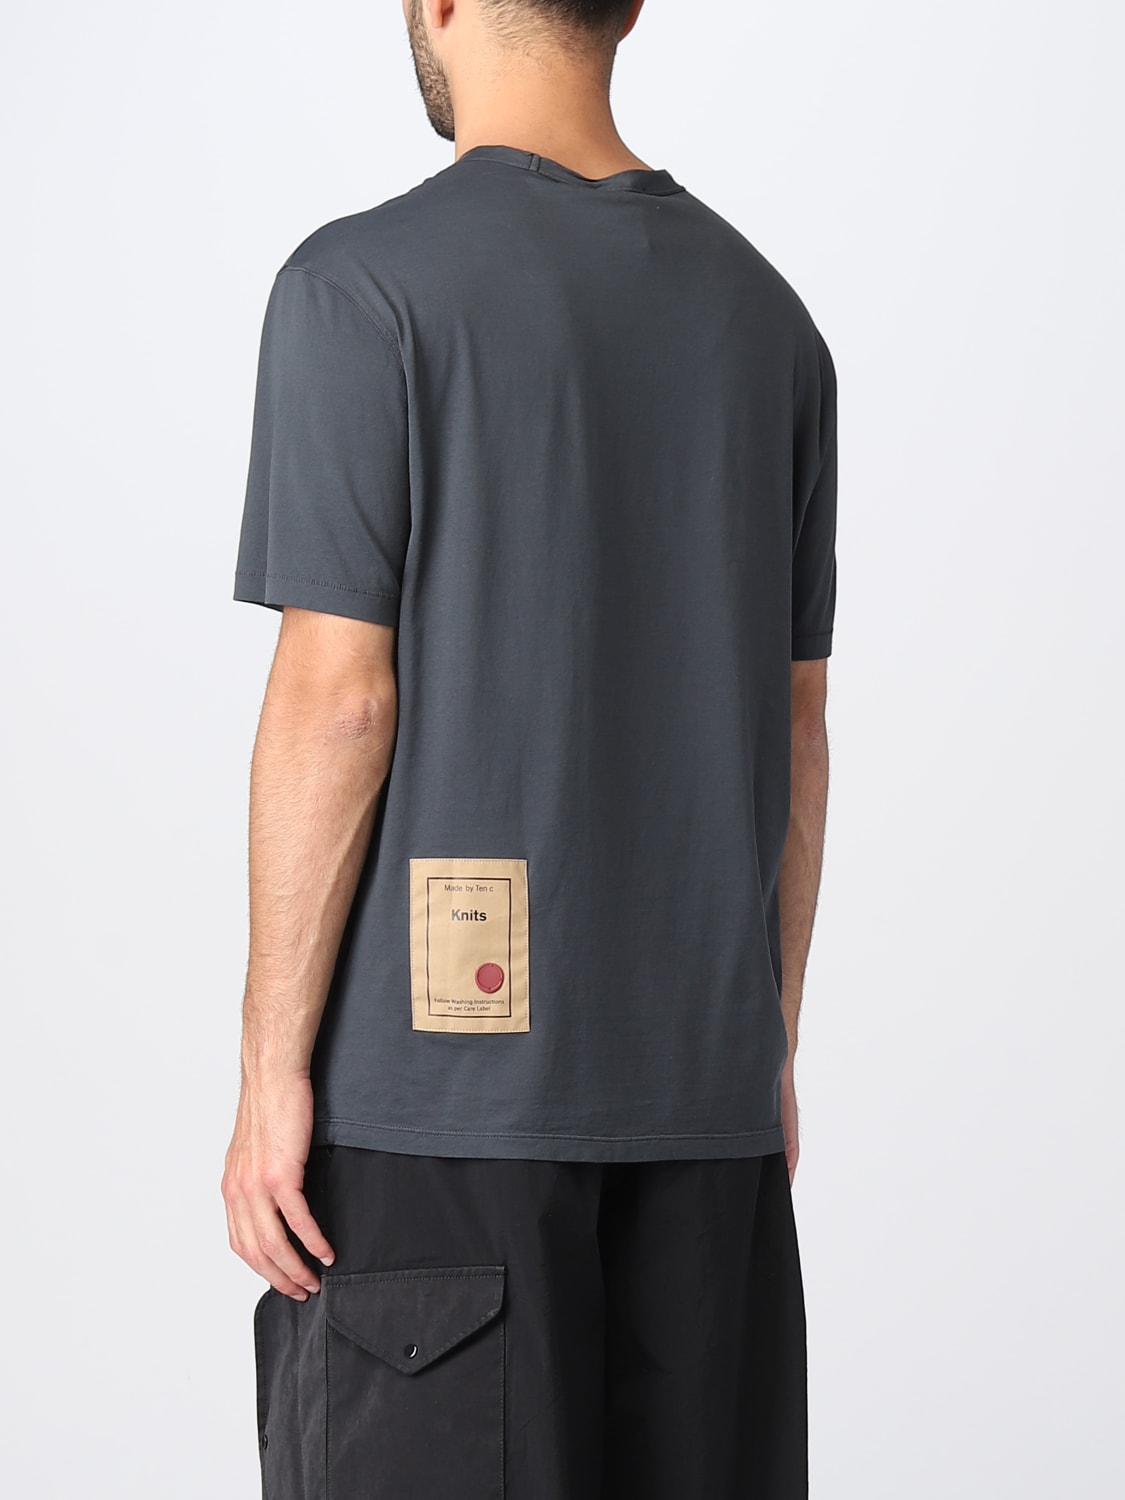 Louis Vuitton Inside Out T-Shirt Staples Edition mens